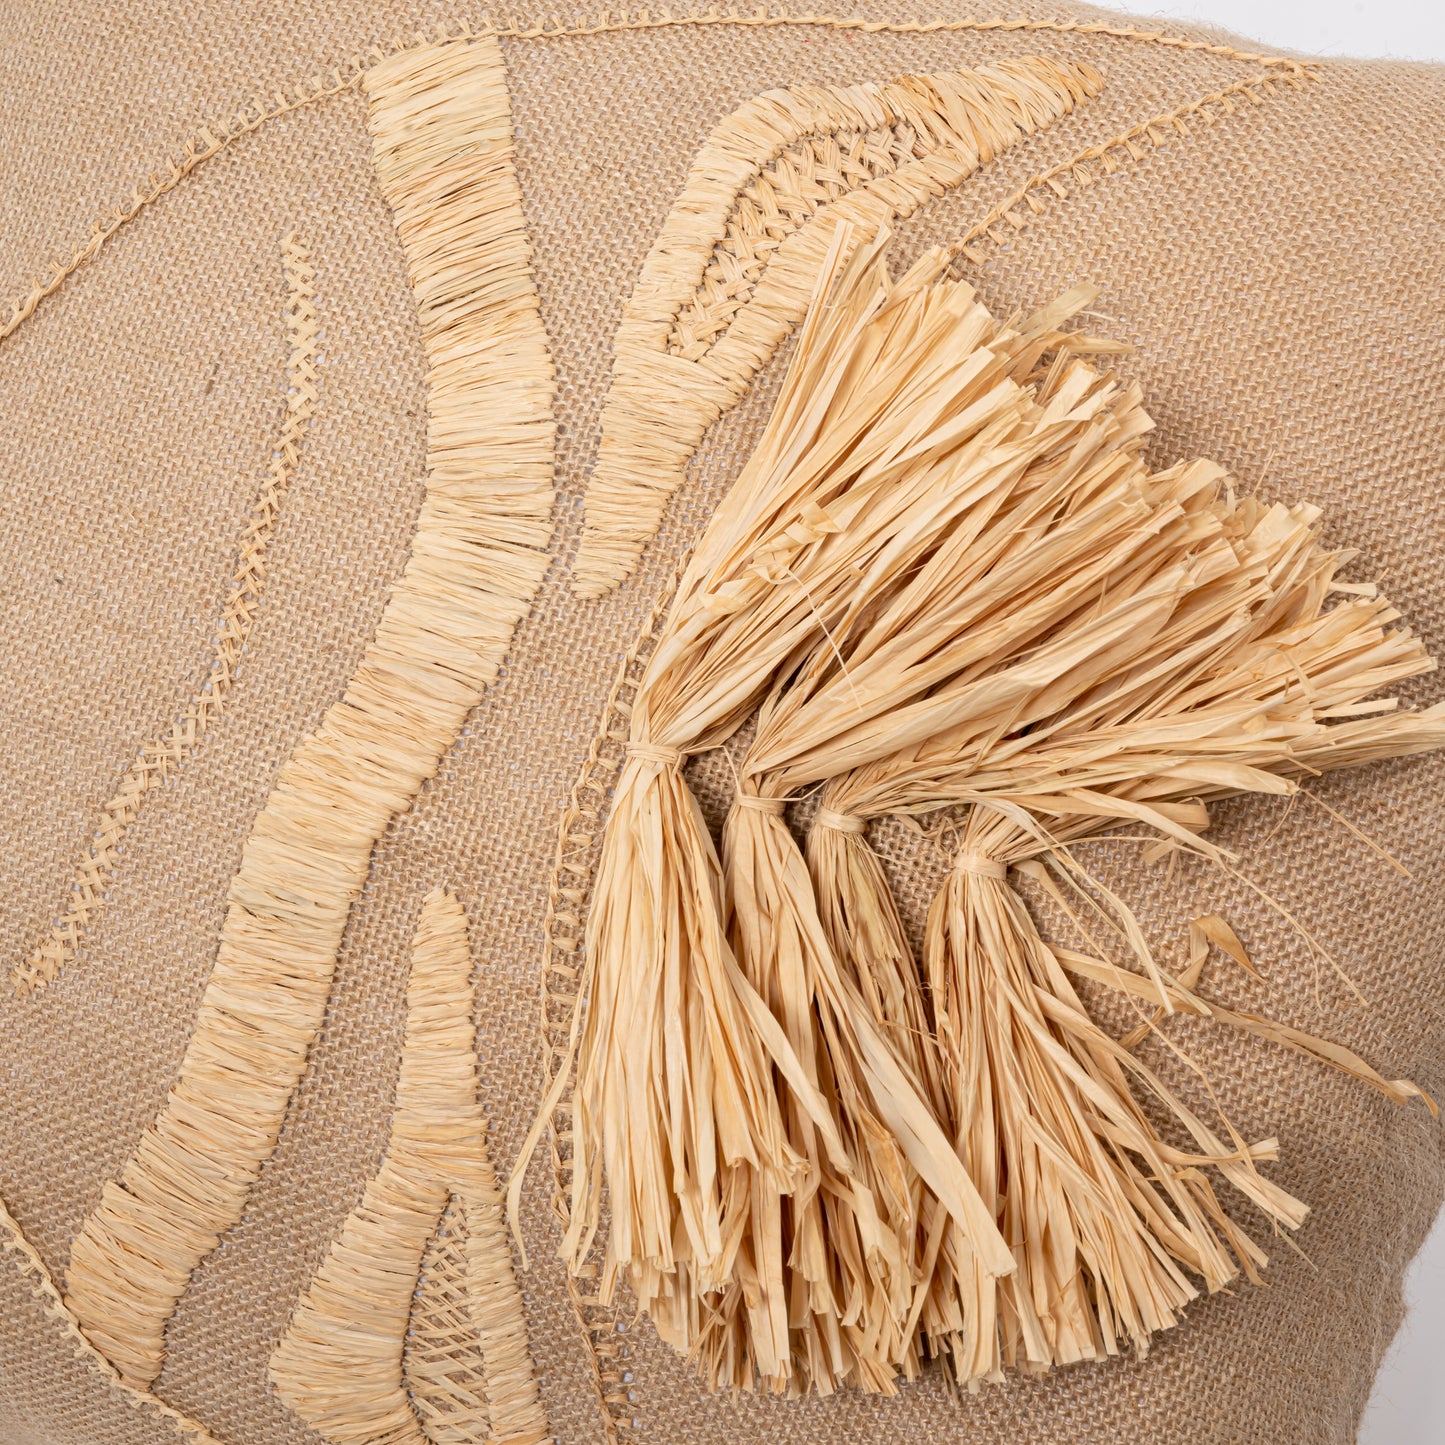 Larinho - jute cushion embroidered with natural raffia